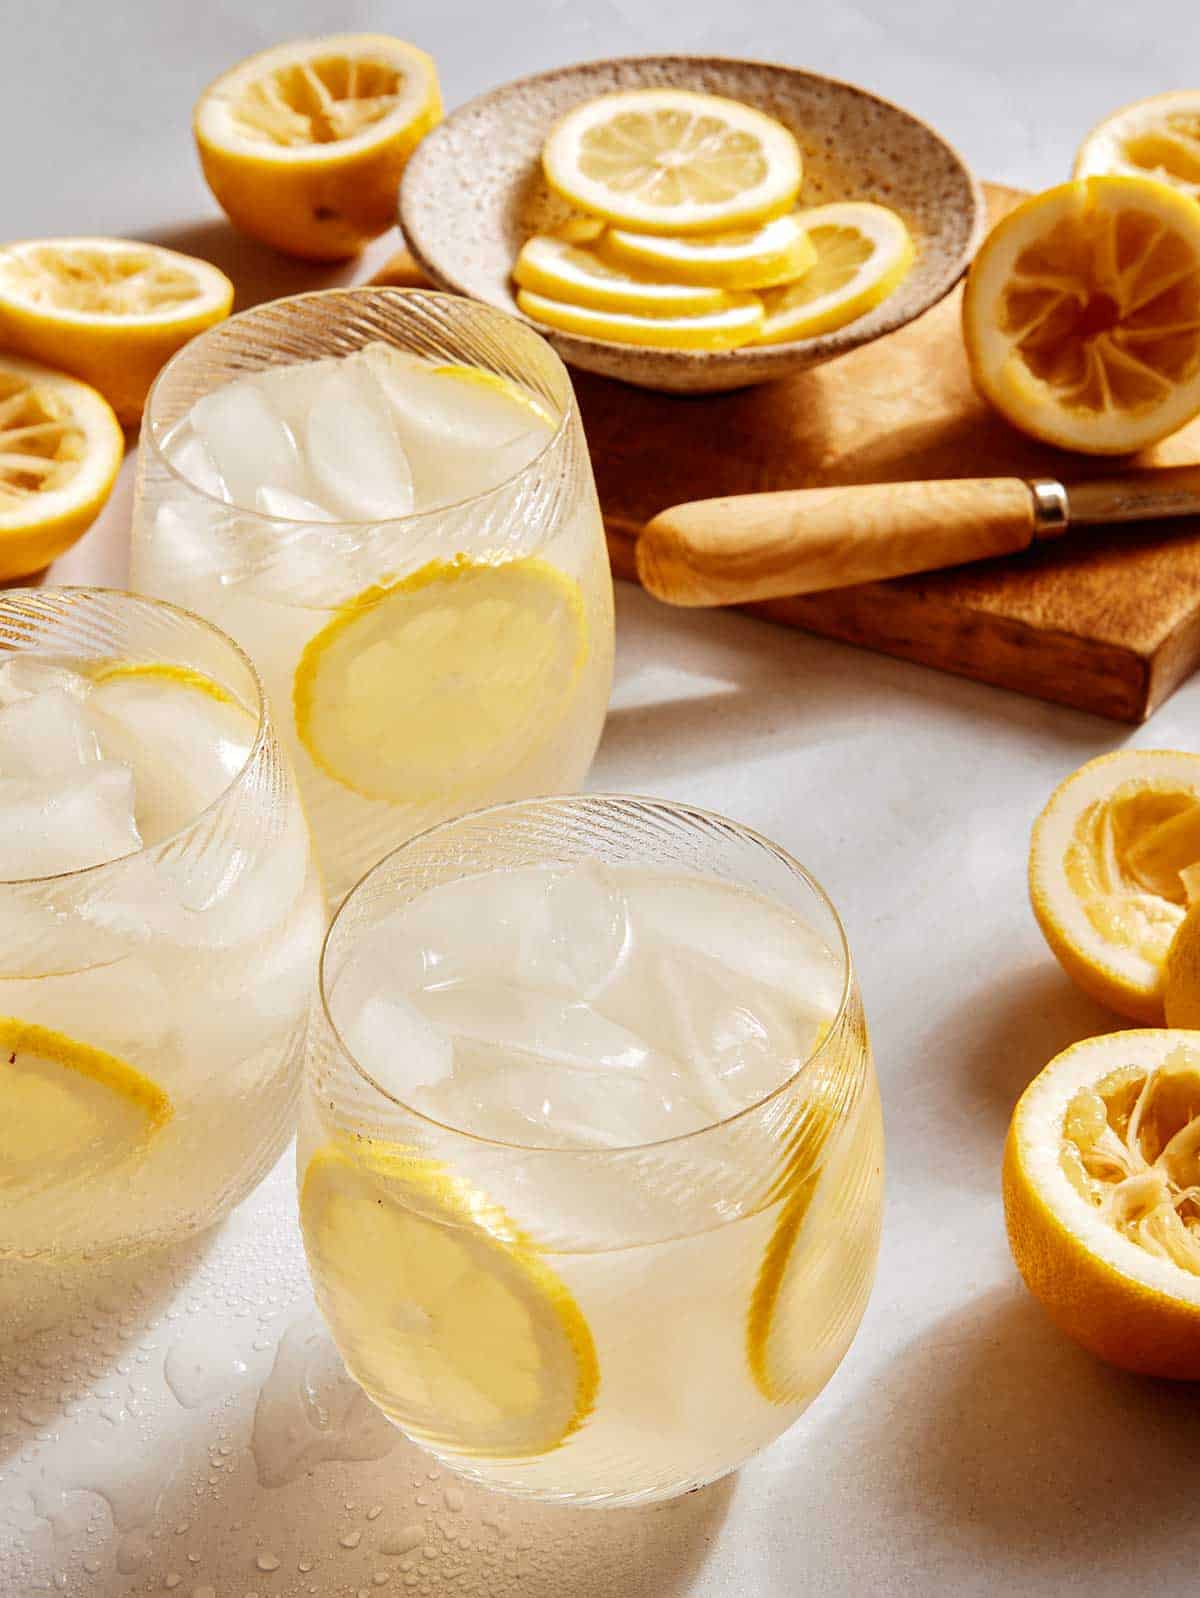 Classic lemonade recipe in glasses garnished with lemon wheels. 